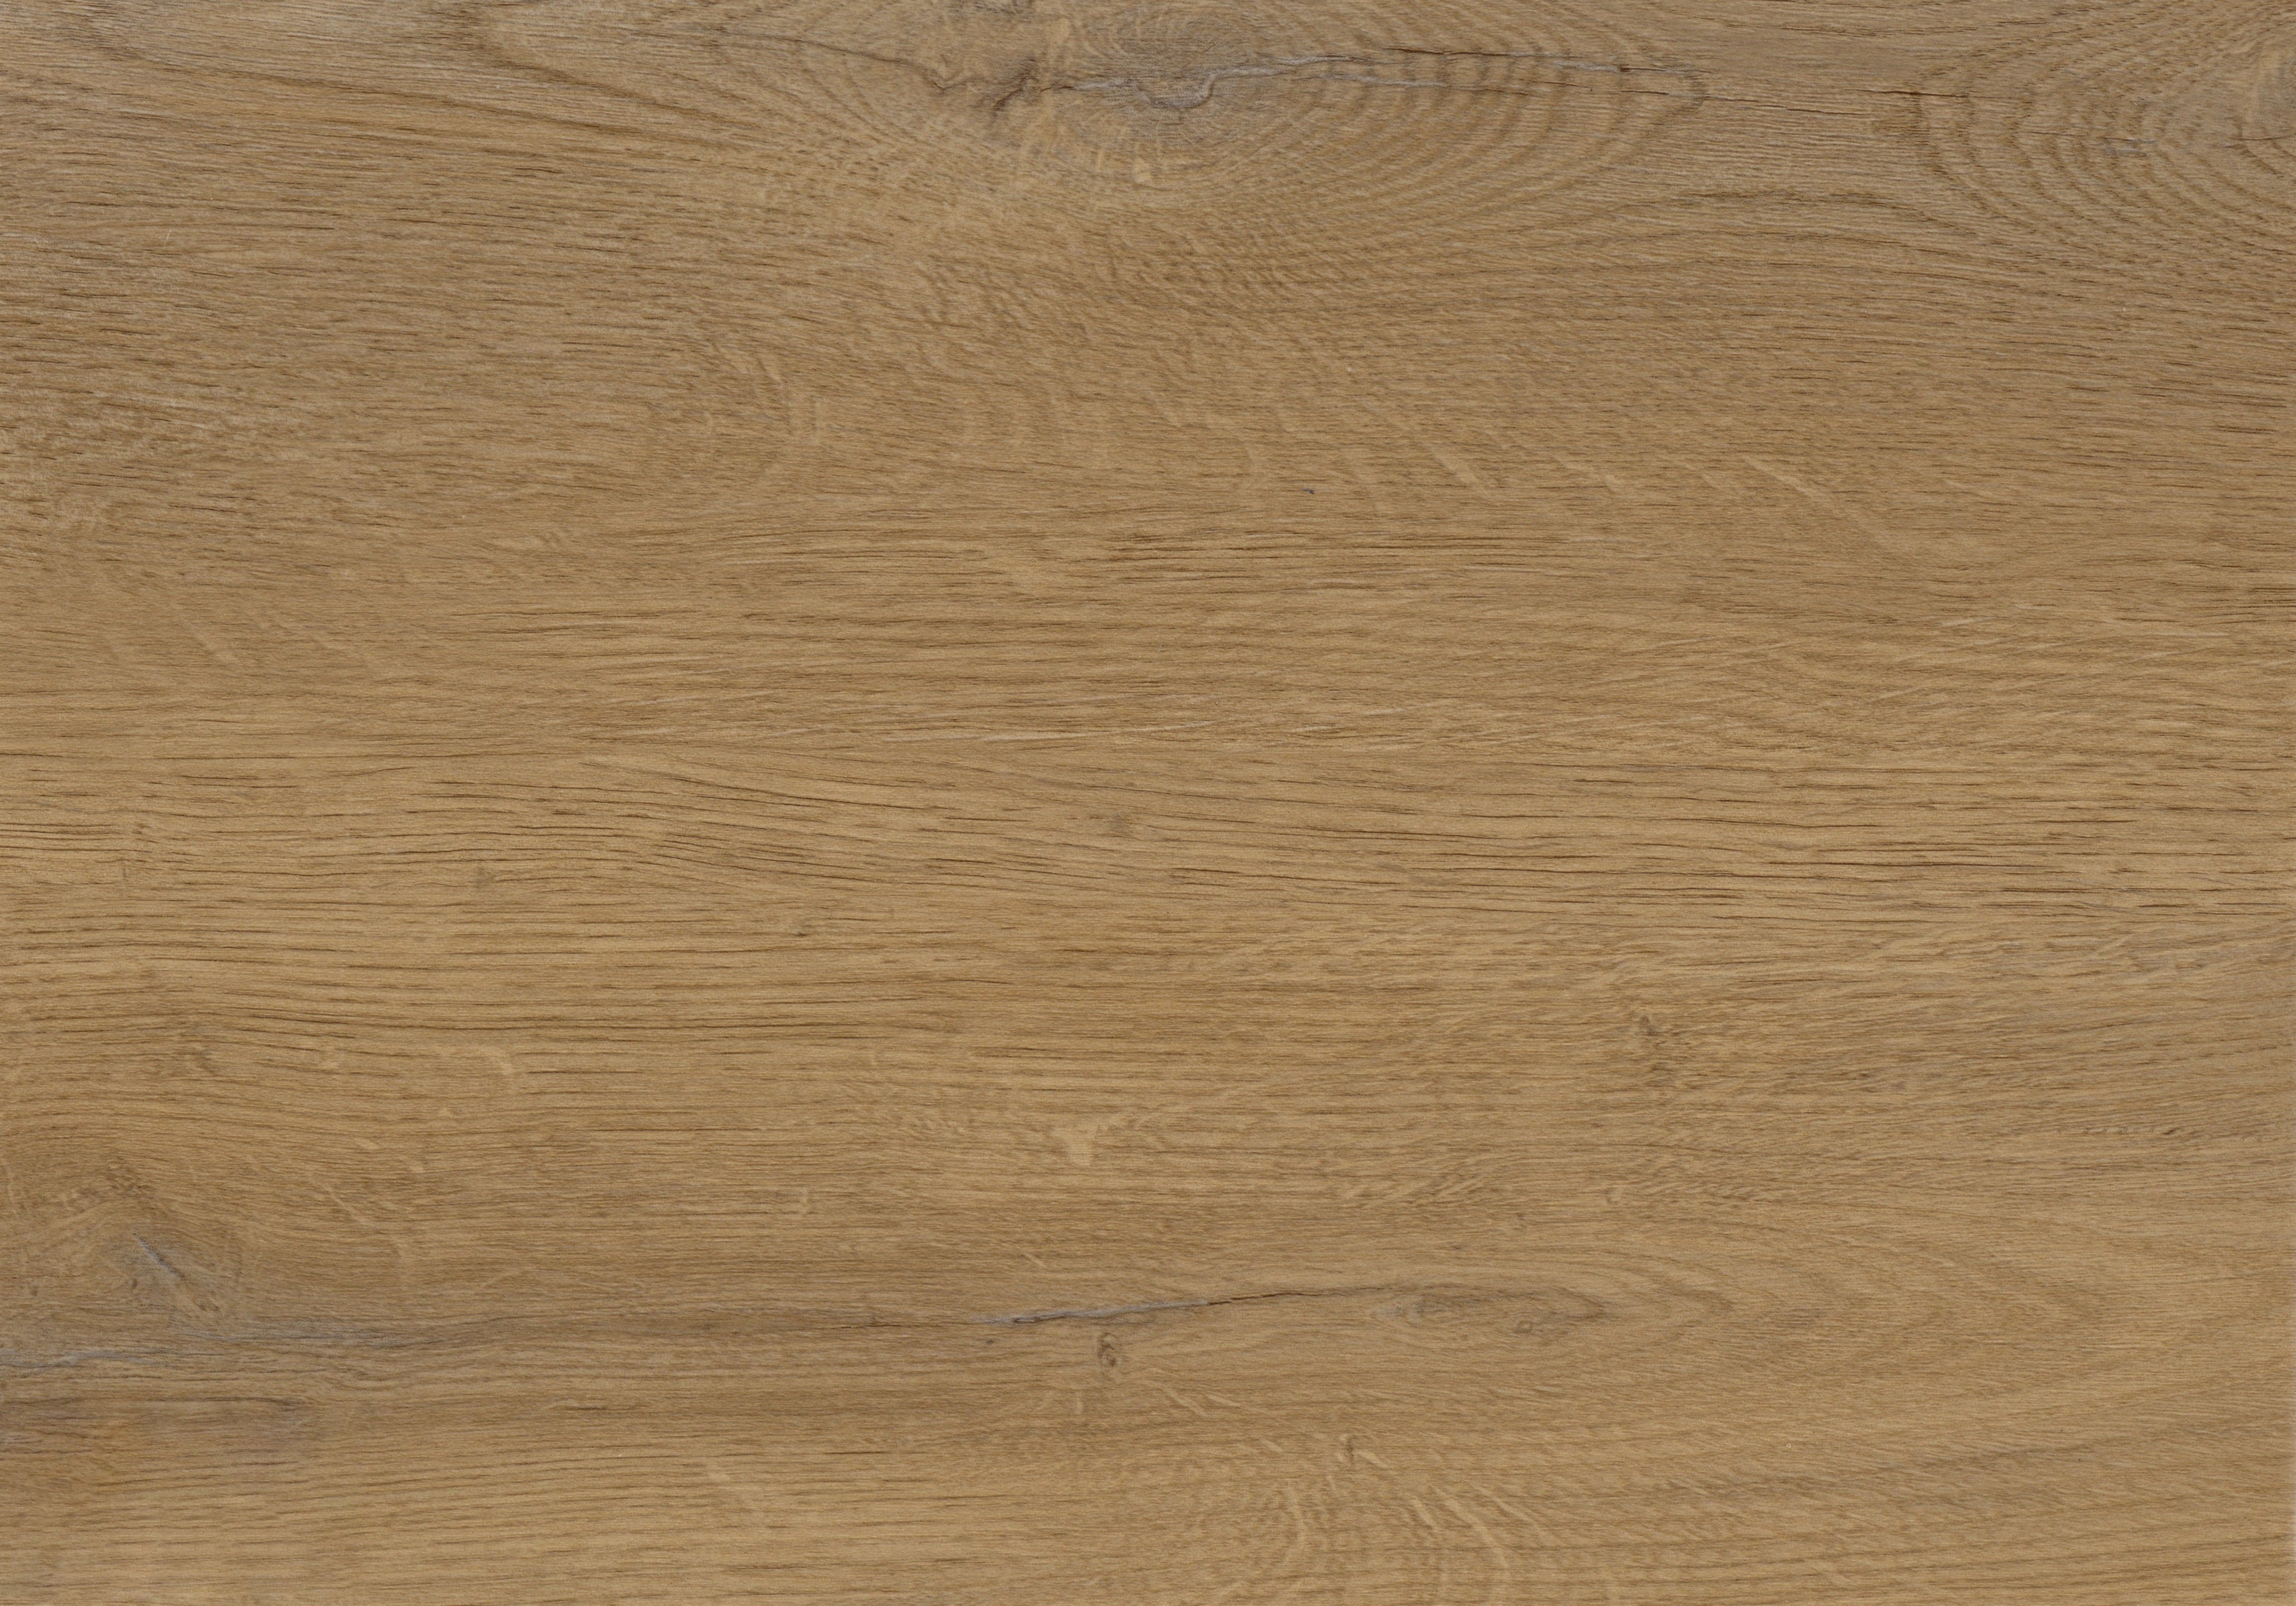 RegalStone Infinity Plank SPC Click Vinyl Flooring - Honey Oak